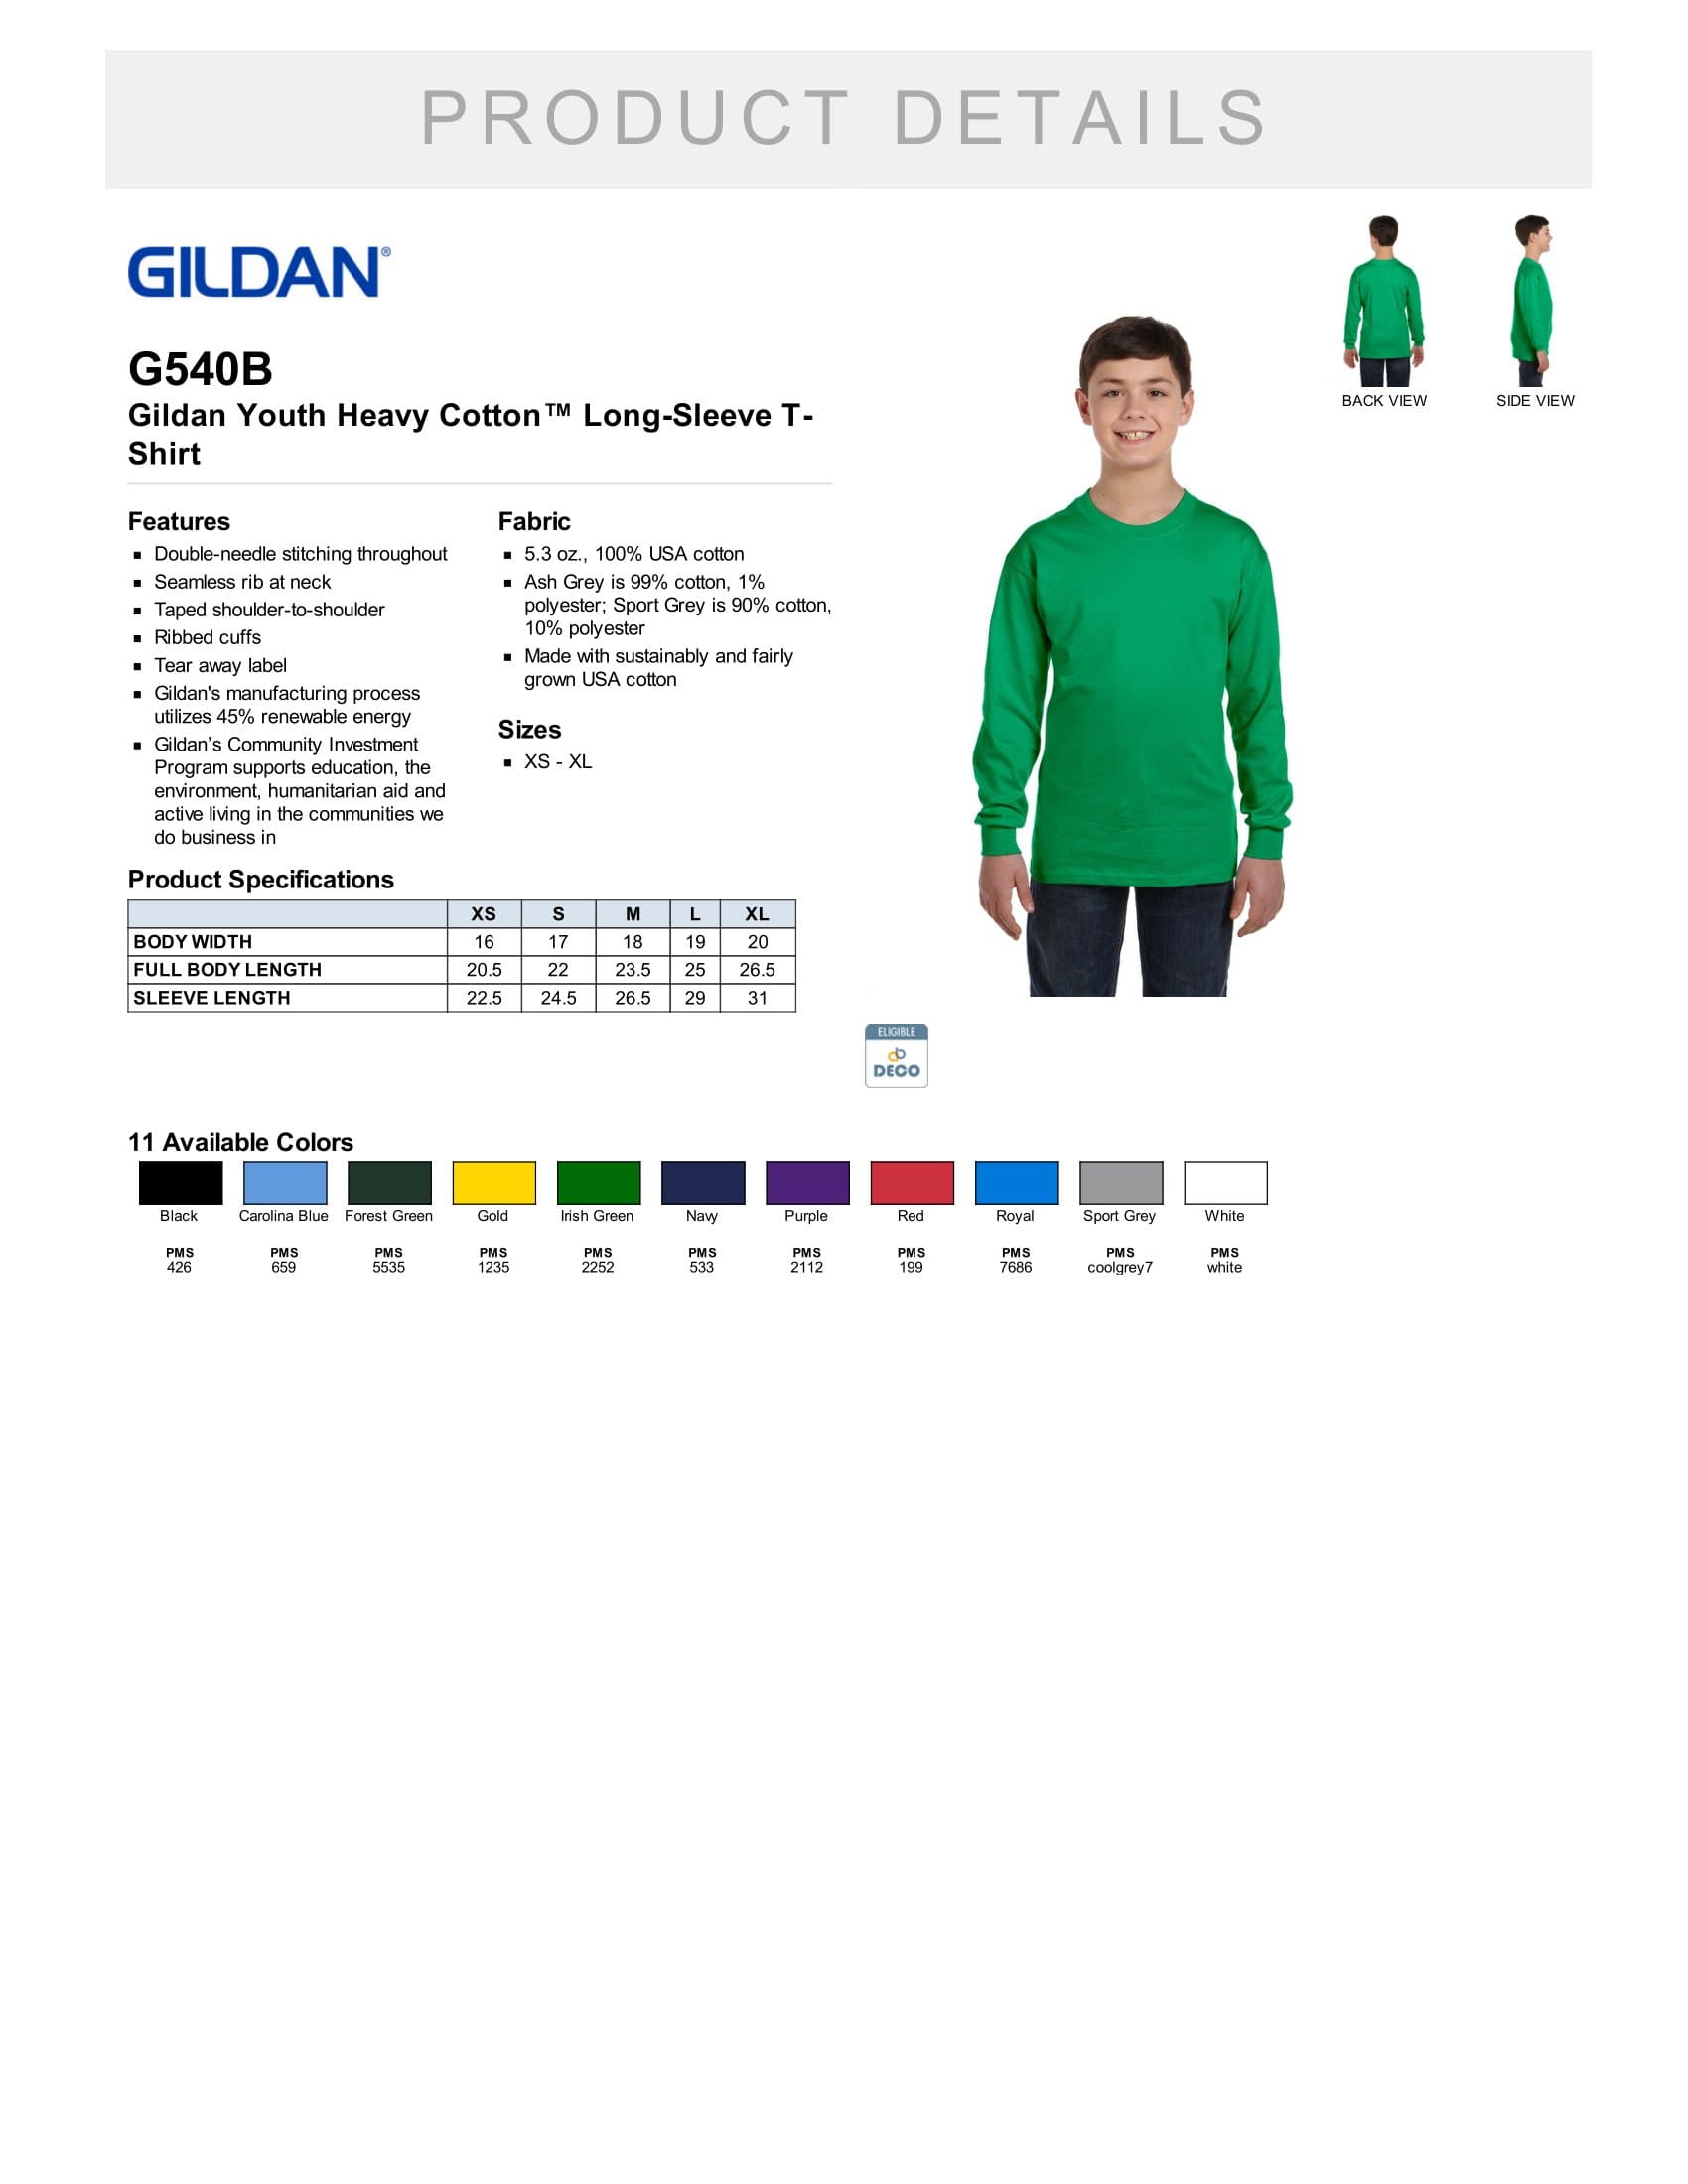 Gildan G540b